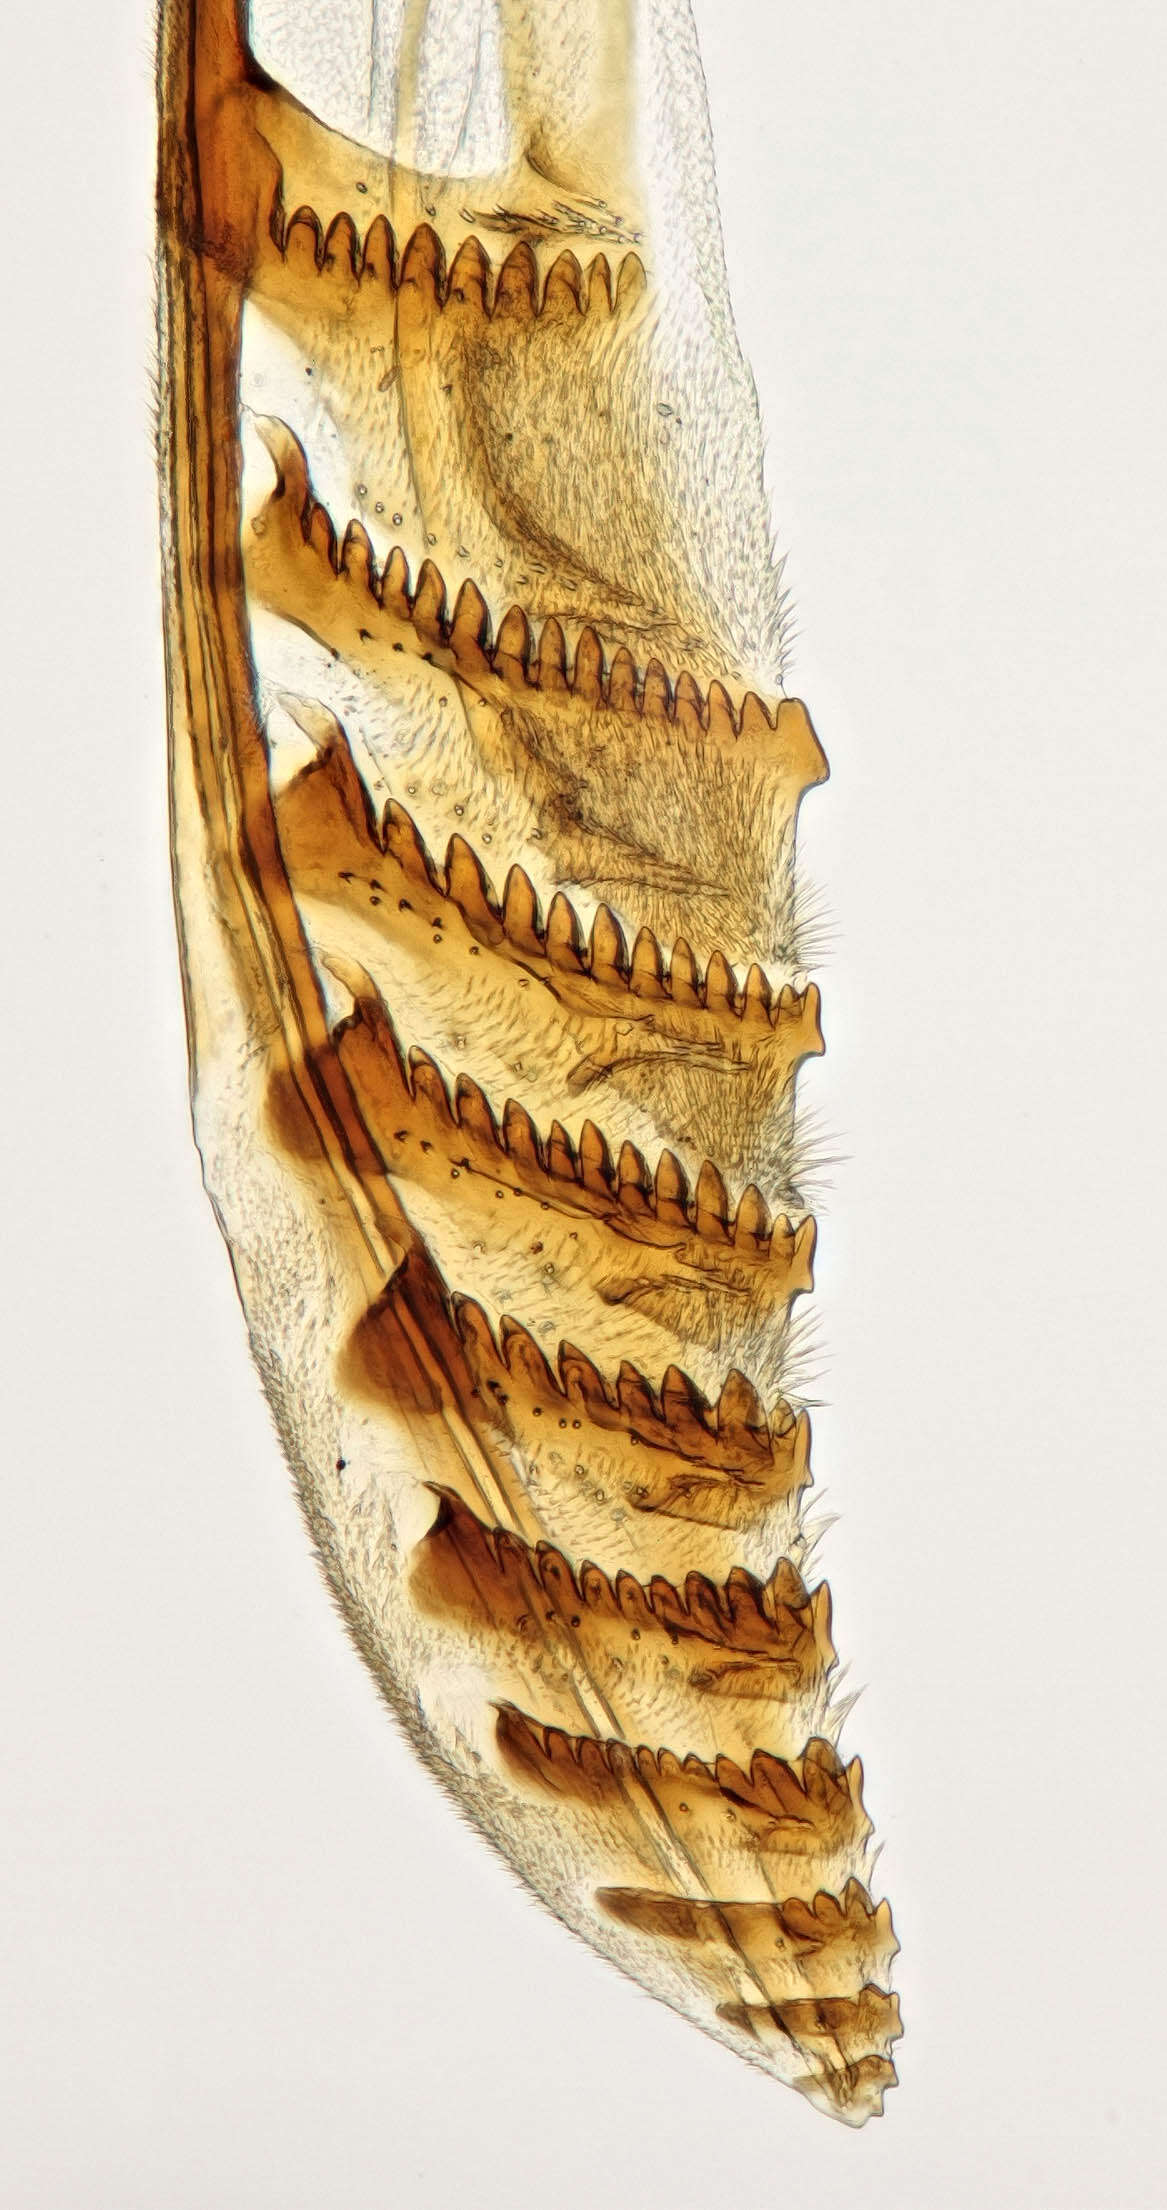 Plancia ëd Diprion similis (Hartig)